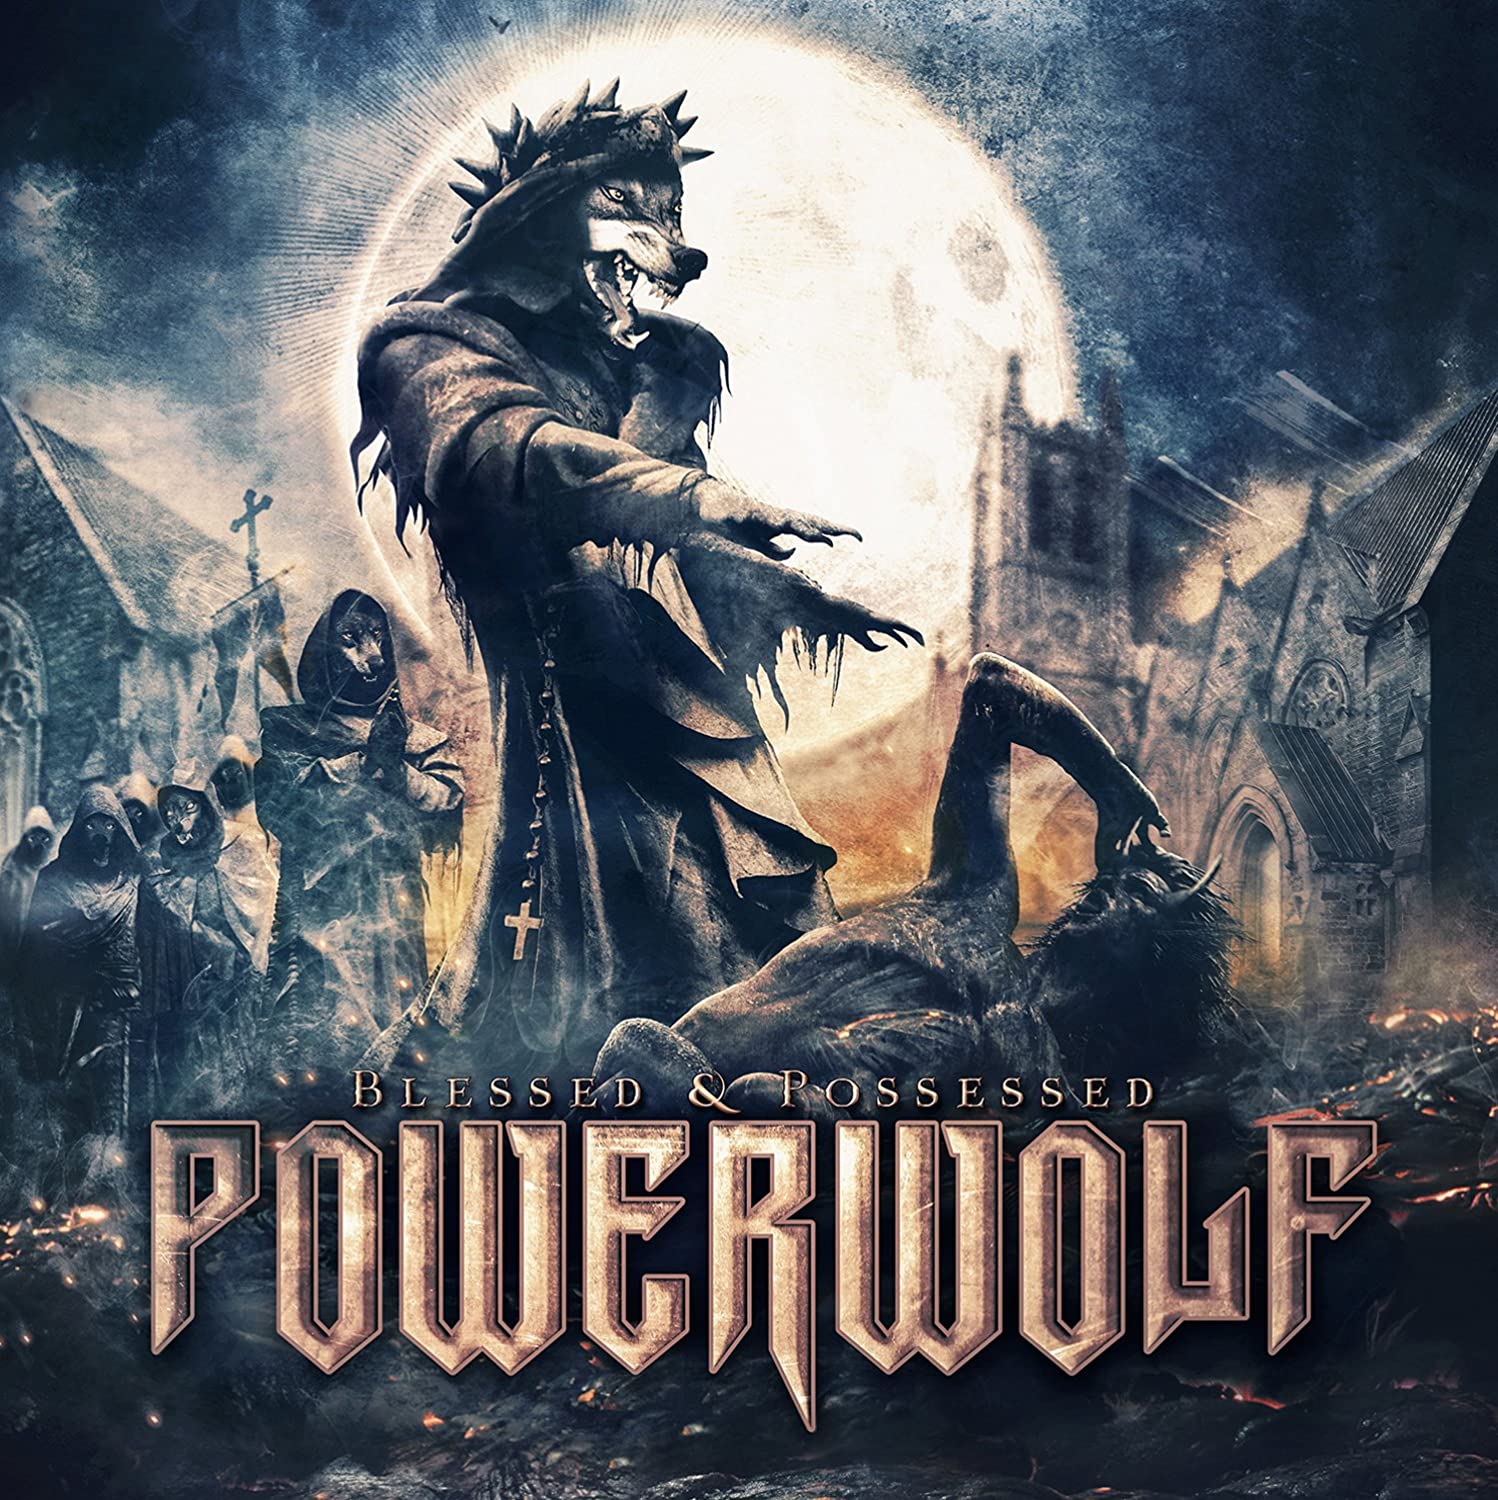 Powerwolf Werewolves of Armenia (Single)- Spirit of Metal Webzine (es)